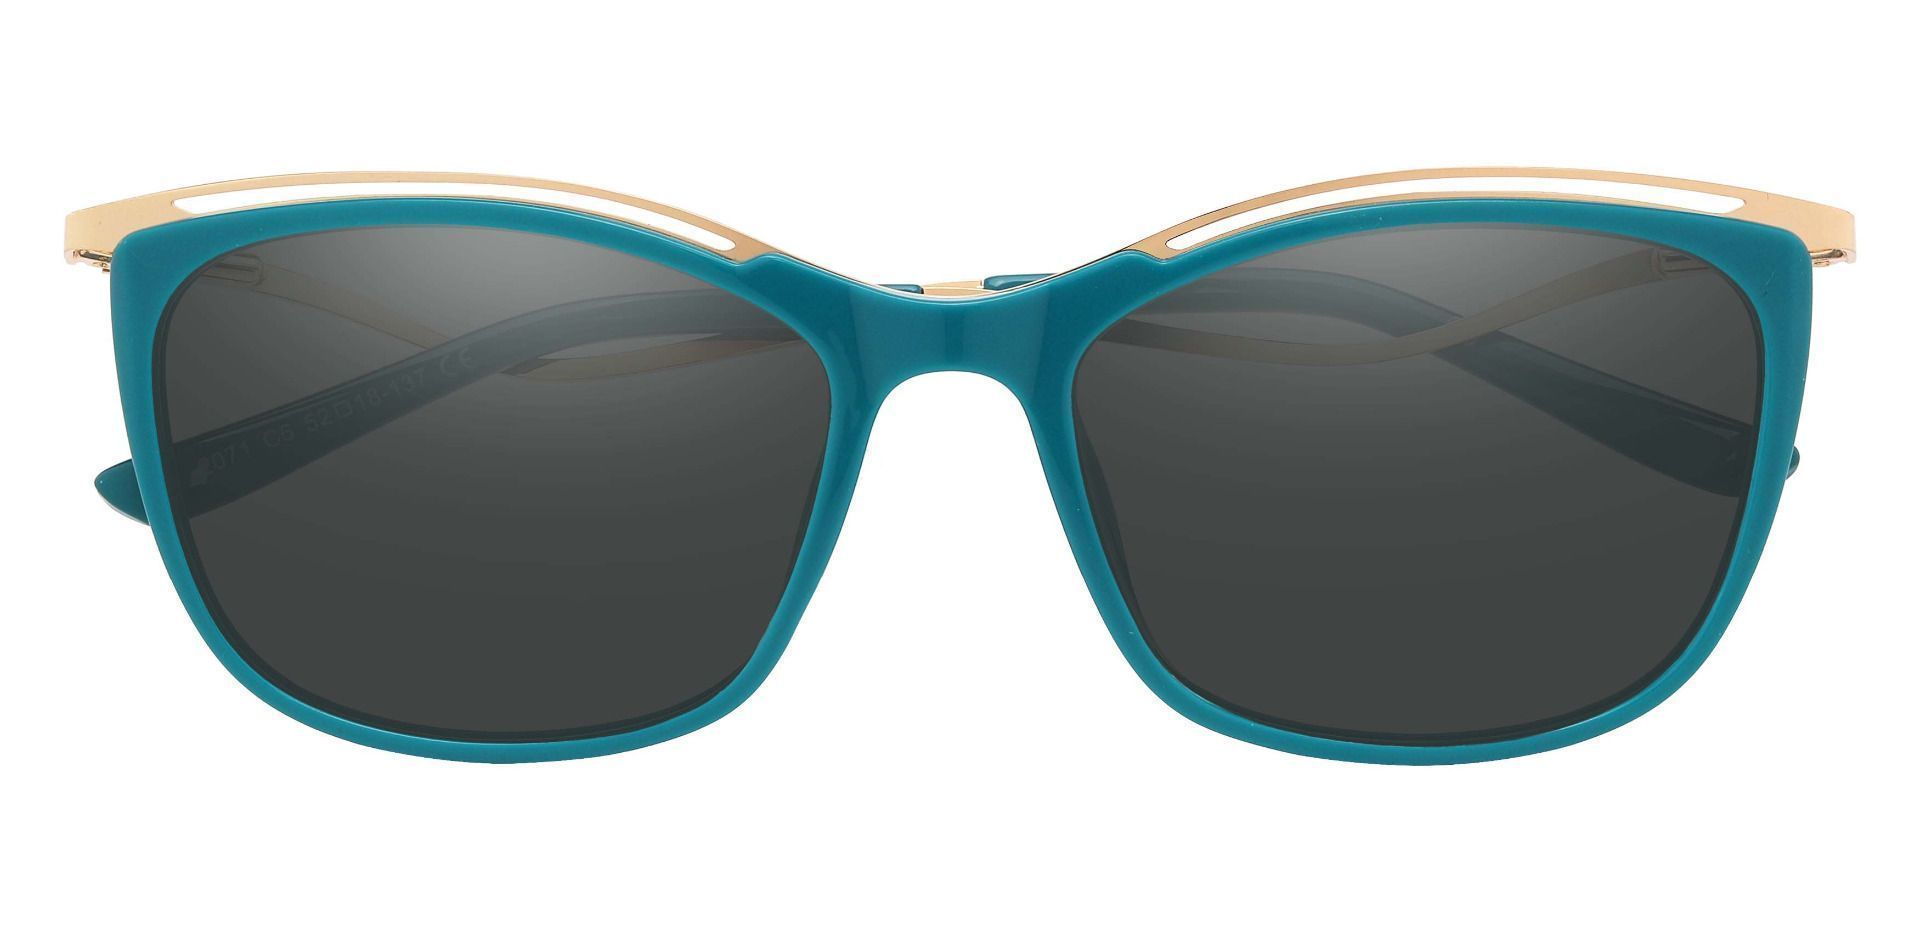 Enola Cat Eye Progressive Sunglasses - Green Frame With Gray Lenses